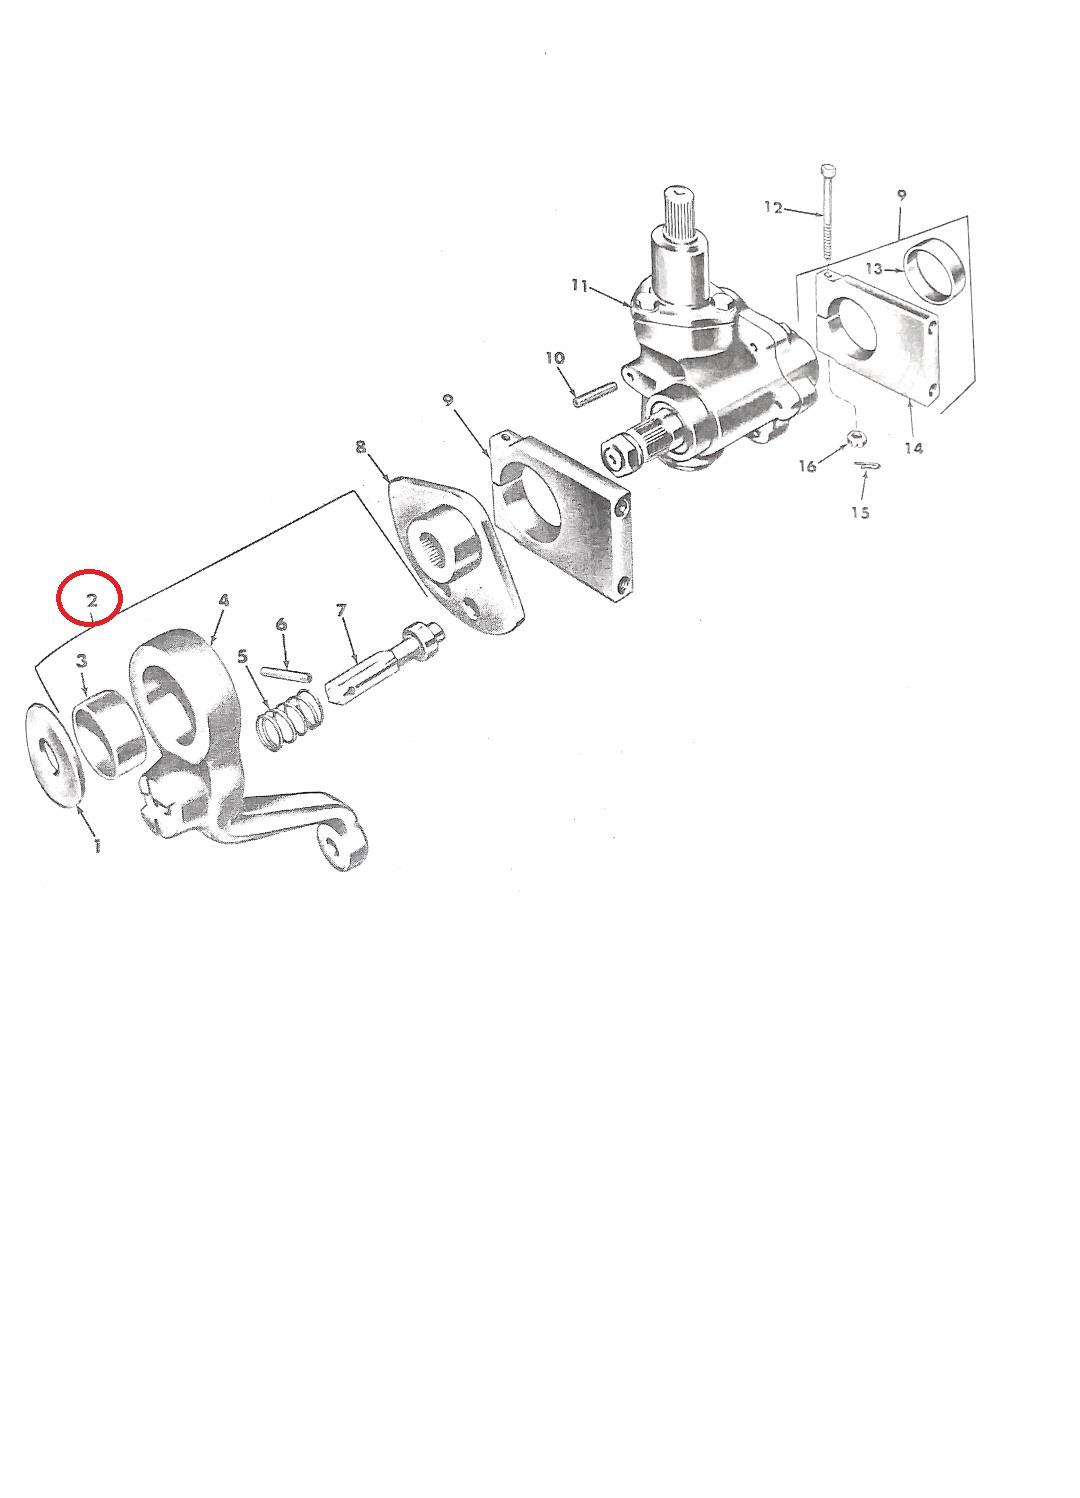 MU-173 | MU-173 Steering Pittman Arm Mule M274 Parts Diagram (Large).jpg